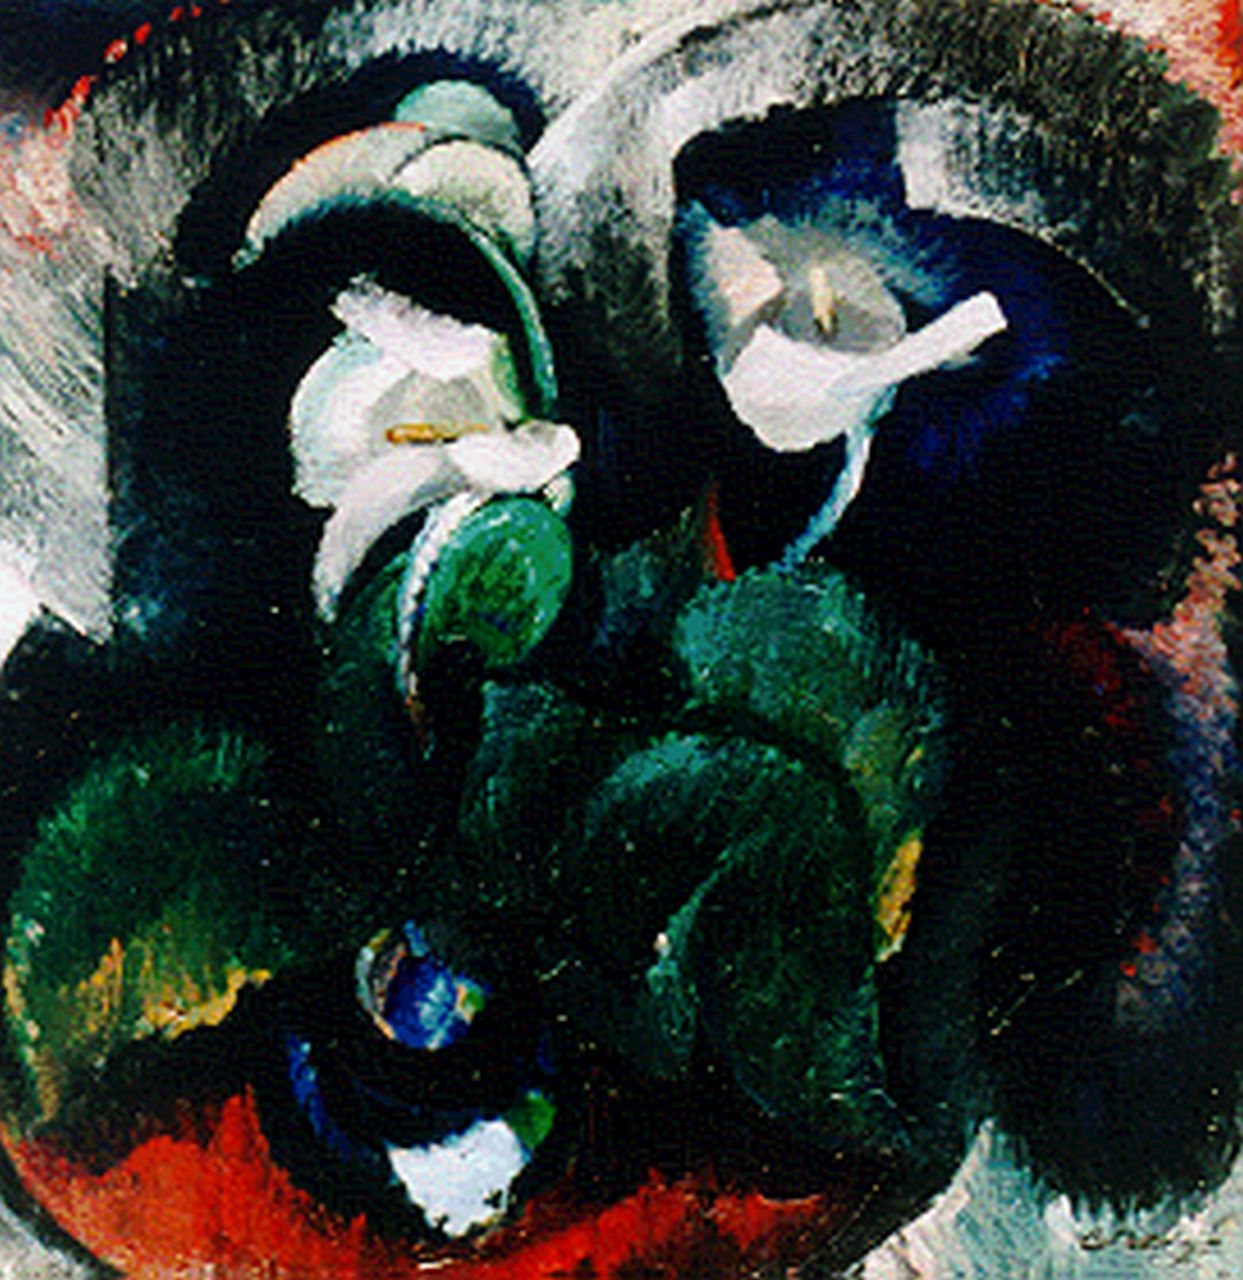 Berg E.  | Else Berg, Arums in a vase, Öl auf Leinwand 78,0 x 76,0 cm, signed l.r. und painted 1917